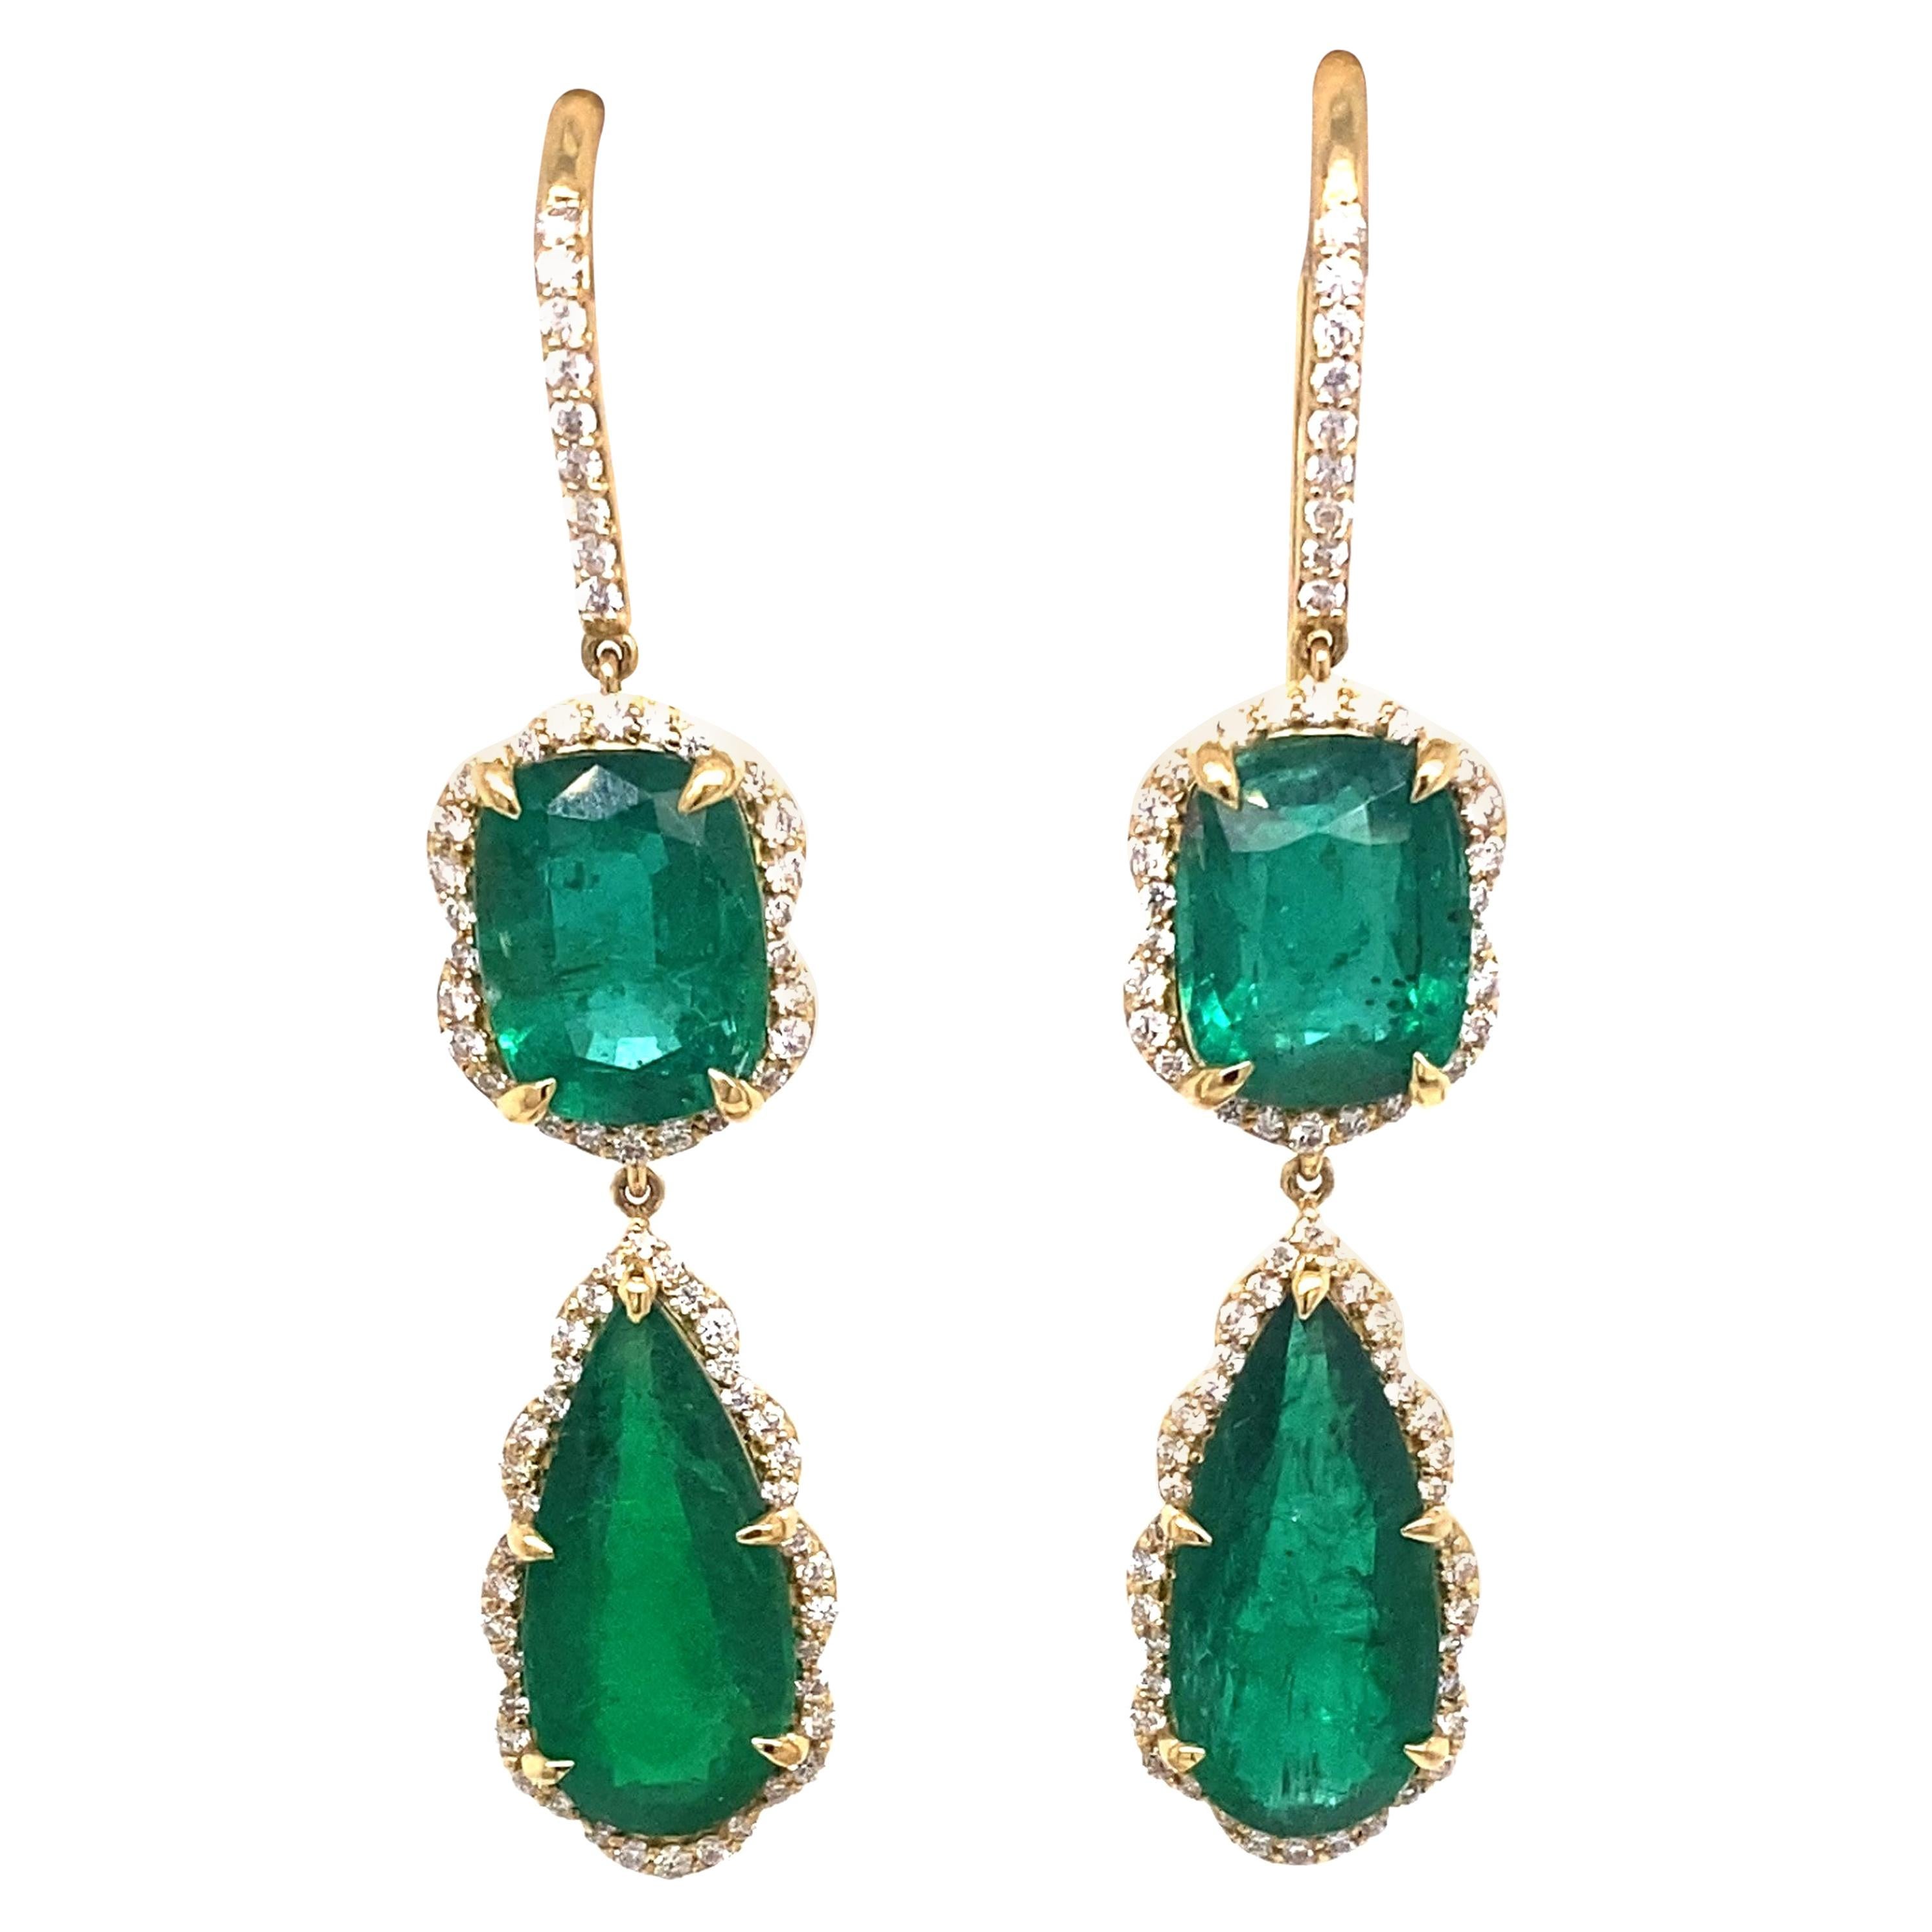 13.61ctw Zambian Emerald & 1.21ctw Round Diamonds 18kt Yellow Gold Earrings